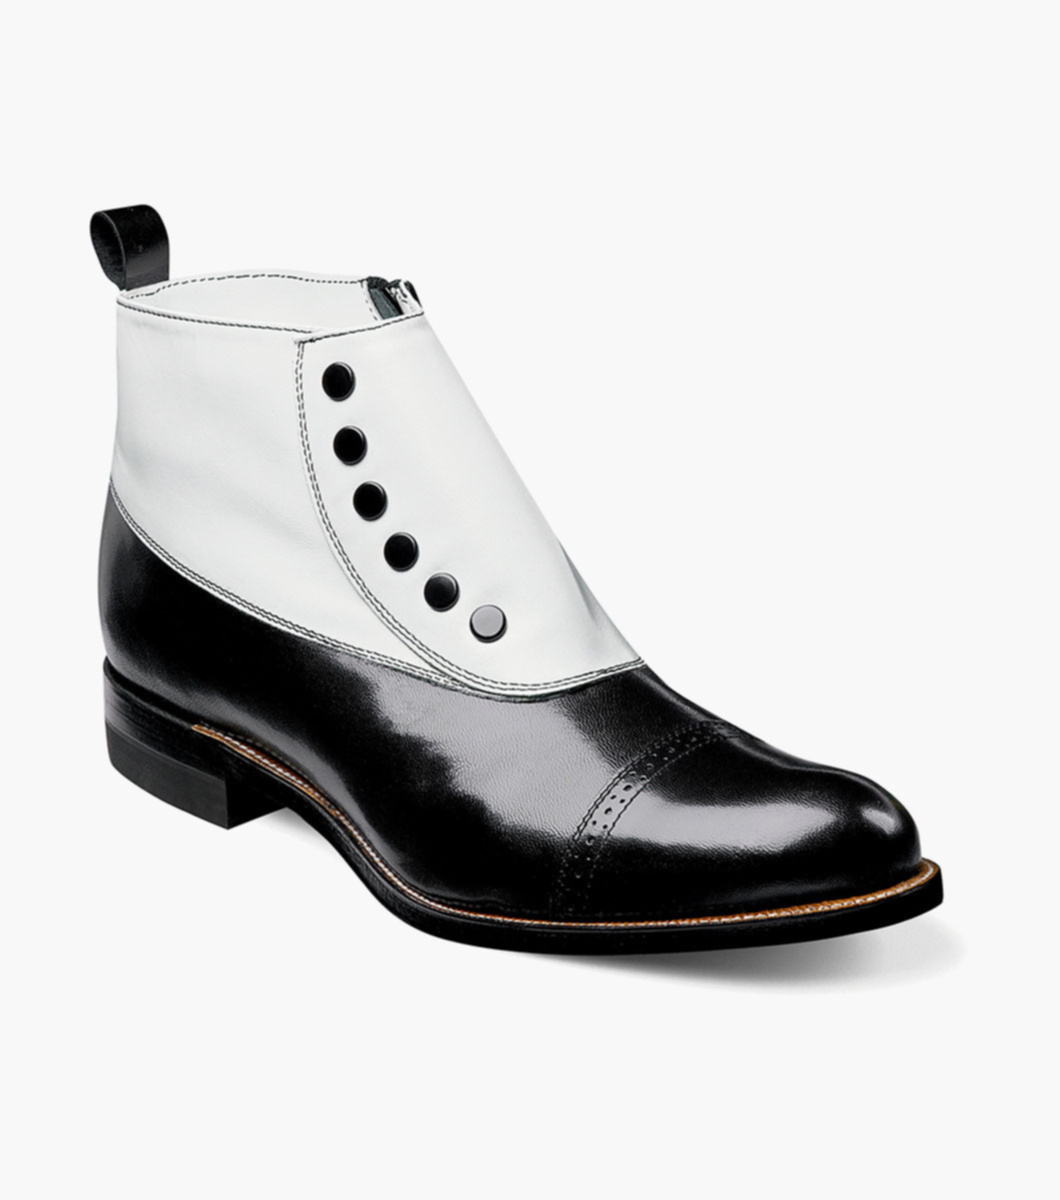 Stacy Adams Men's Madison White Cap toe Shoes 00012-07 